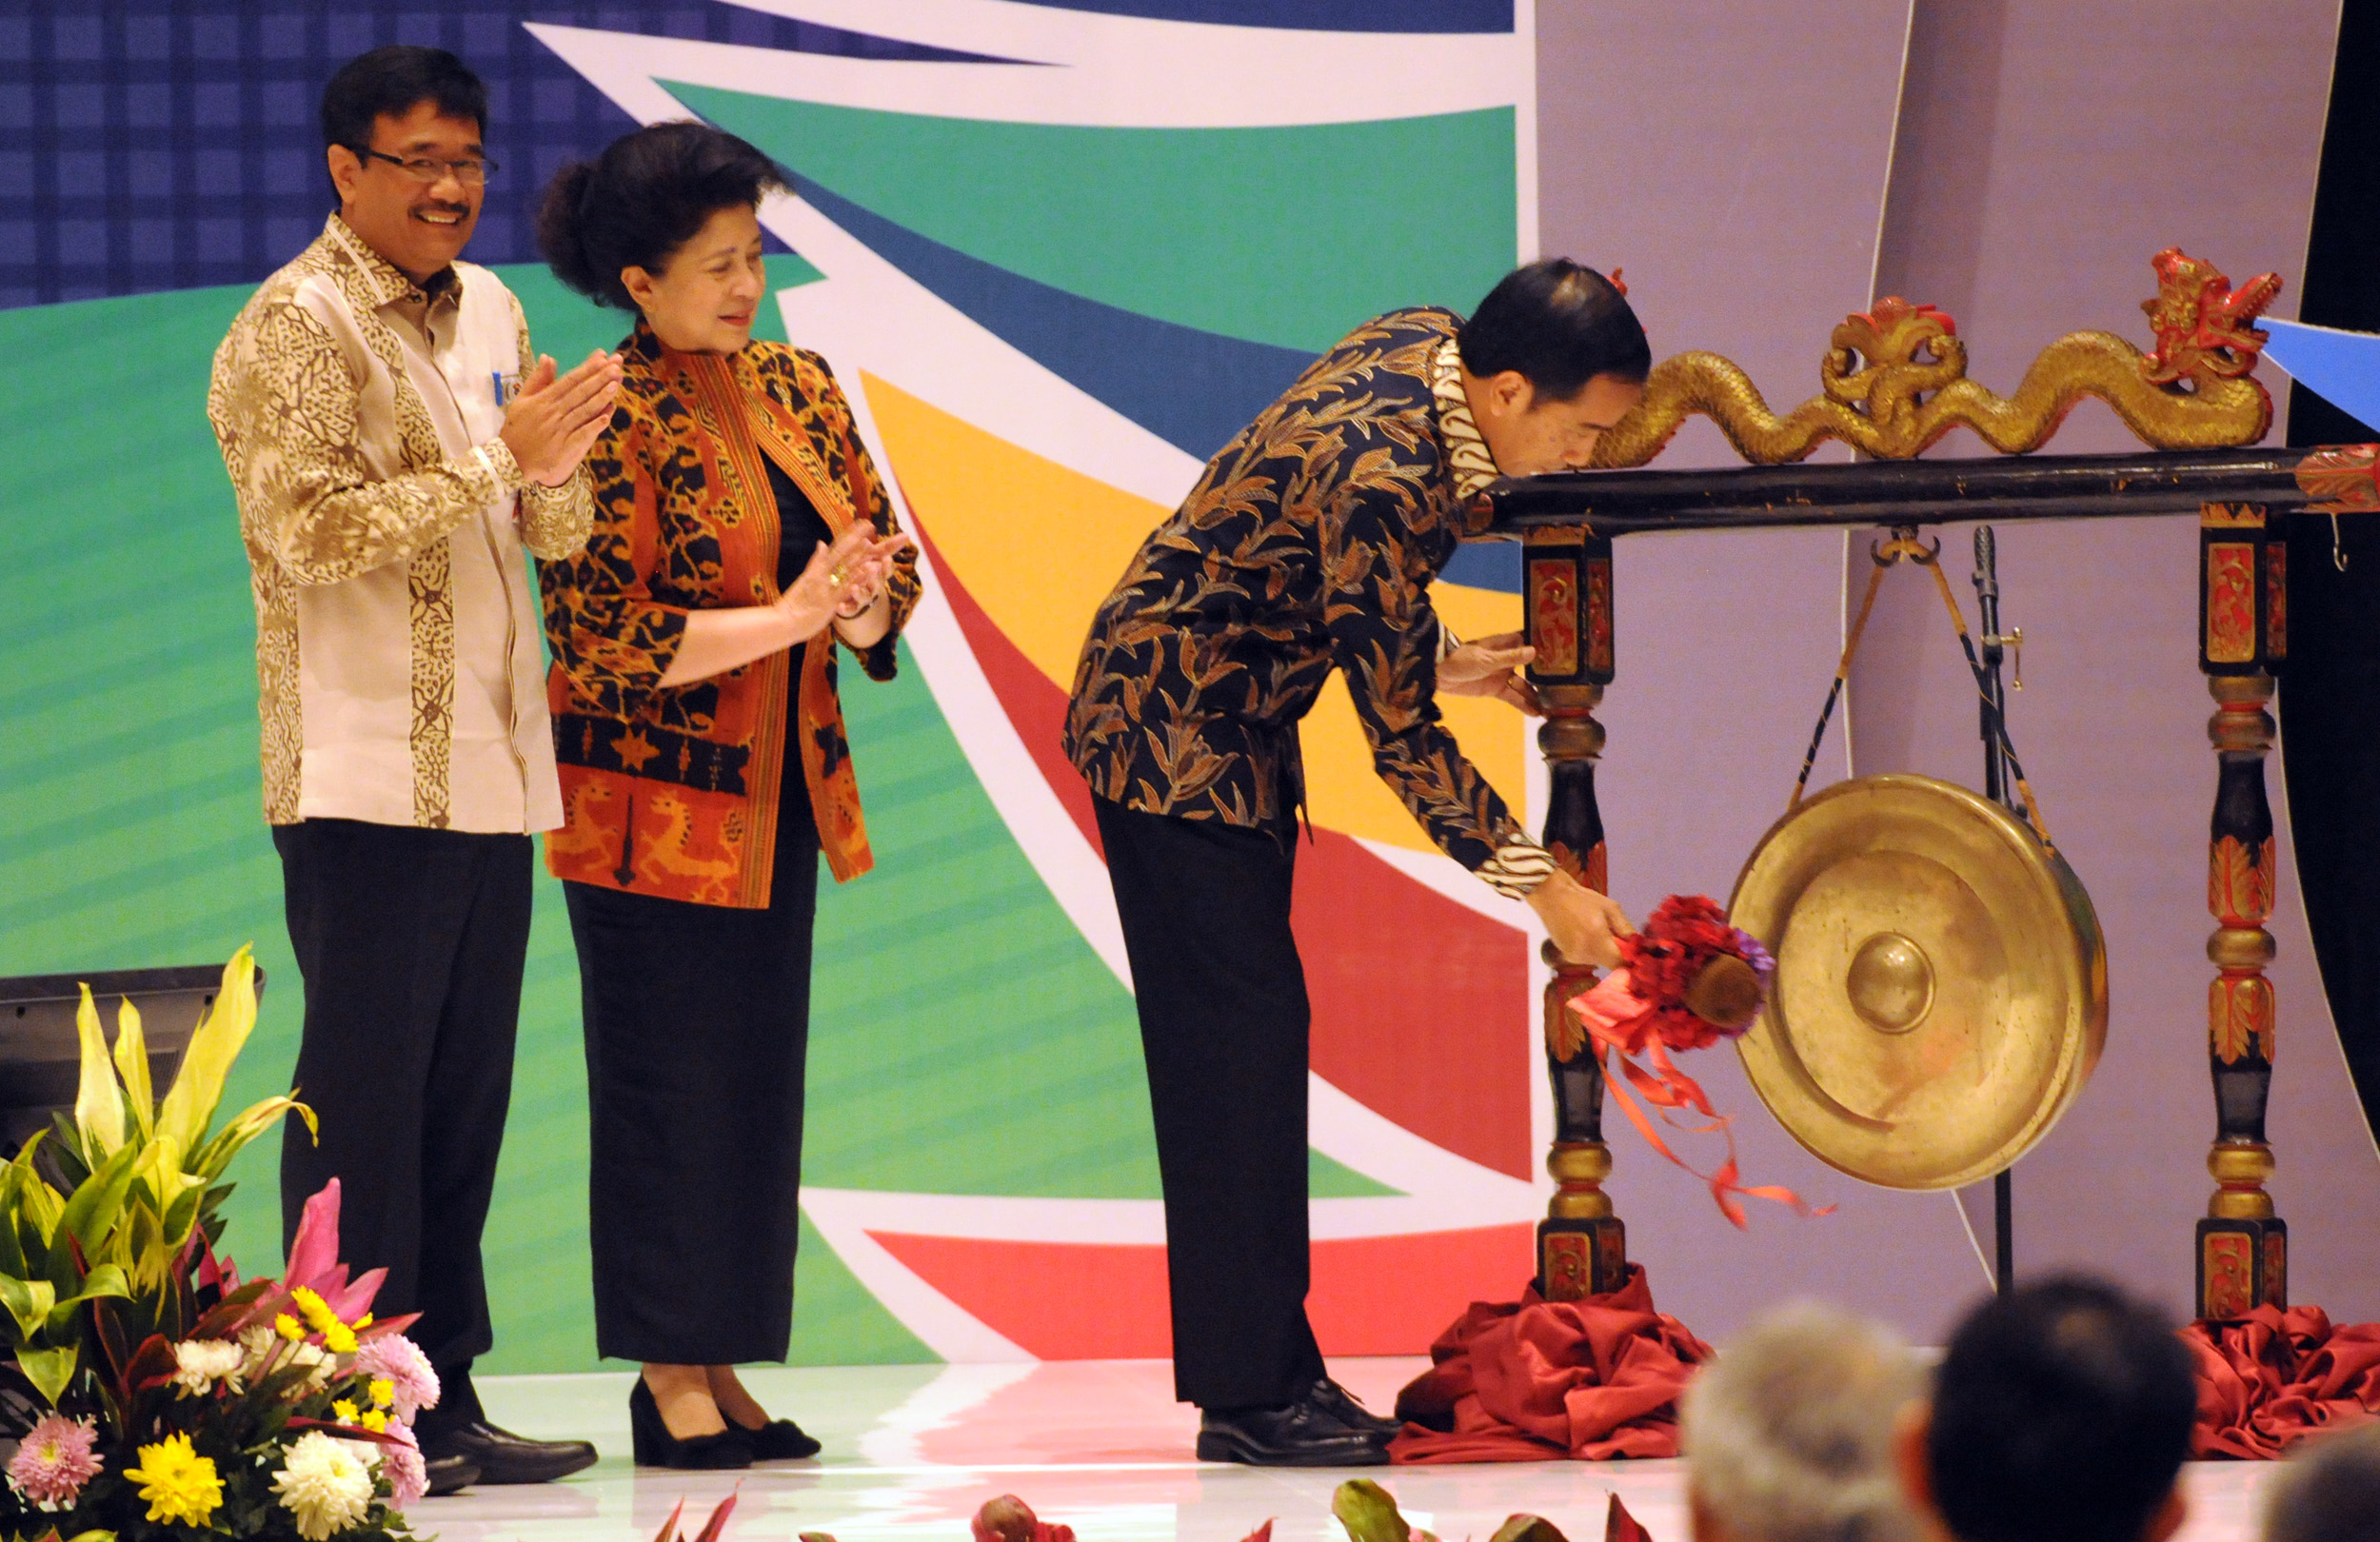 Presiden Jokowi didamping Menkes dan Wagub DKI Jakarta memukul gong tanda dimulainya pembukaan Raker Kesehatan Nasional 2017, di Hotel Bidakara, Jakarta, Selasa (28/2) pagi. (Foto: Rahmat/Humas)